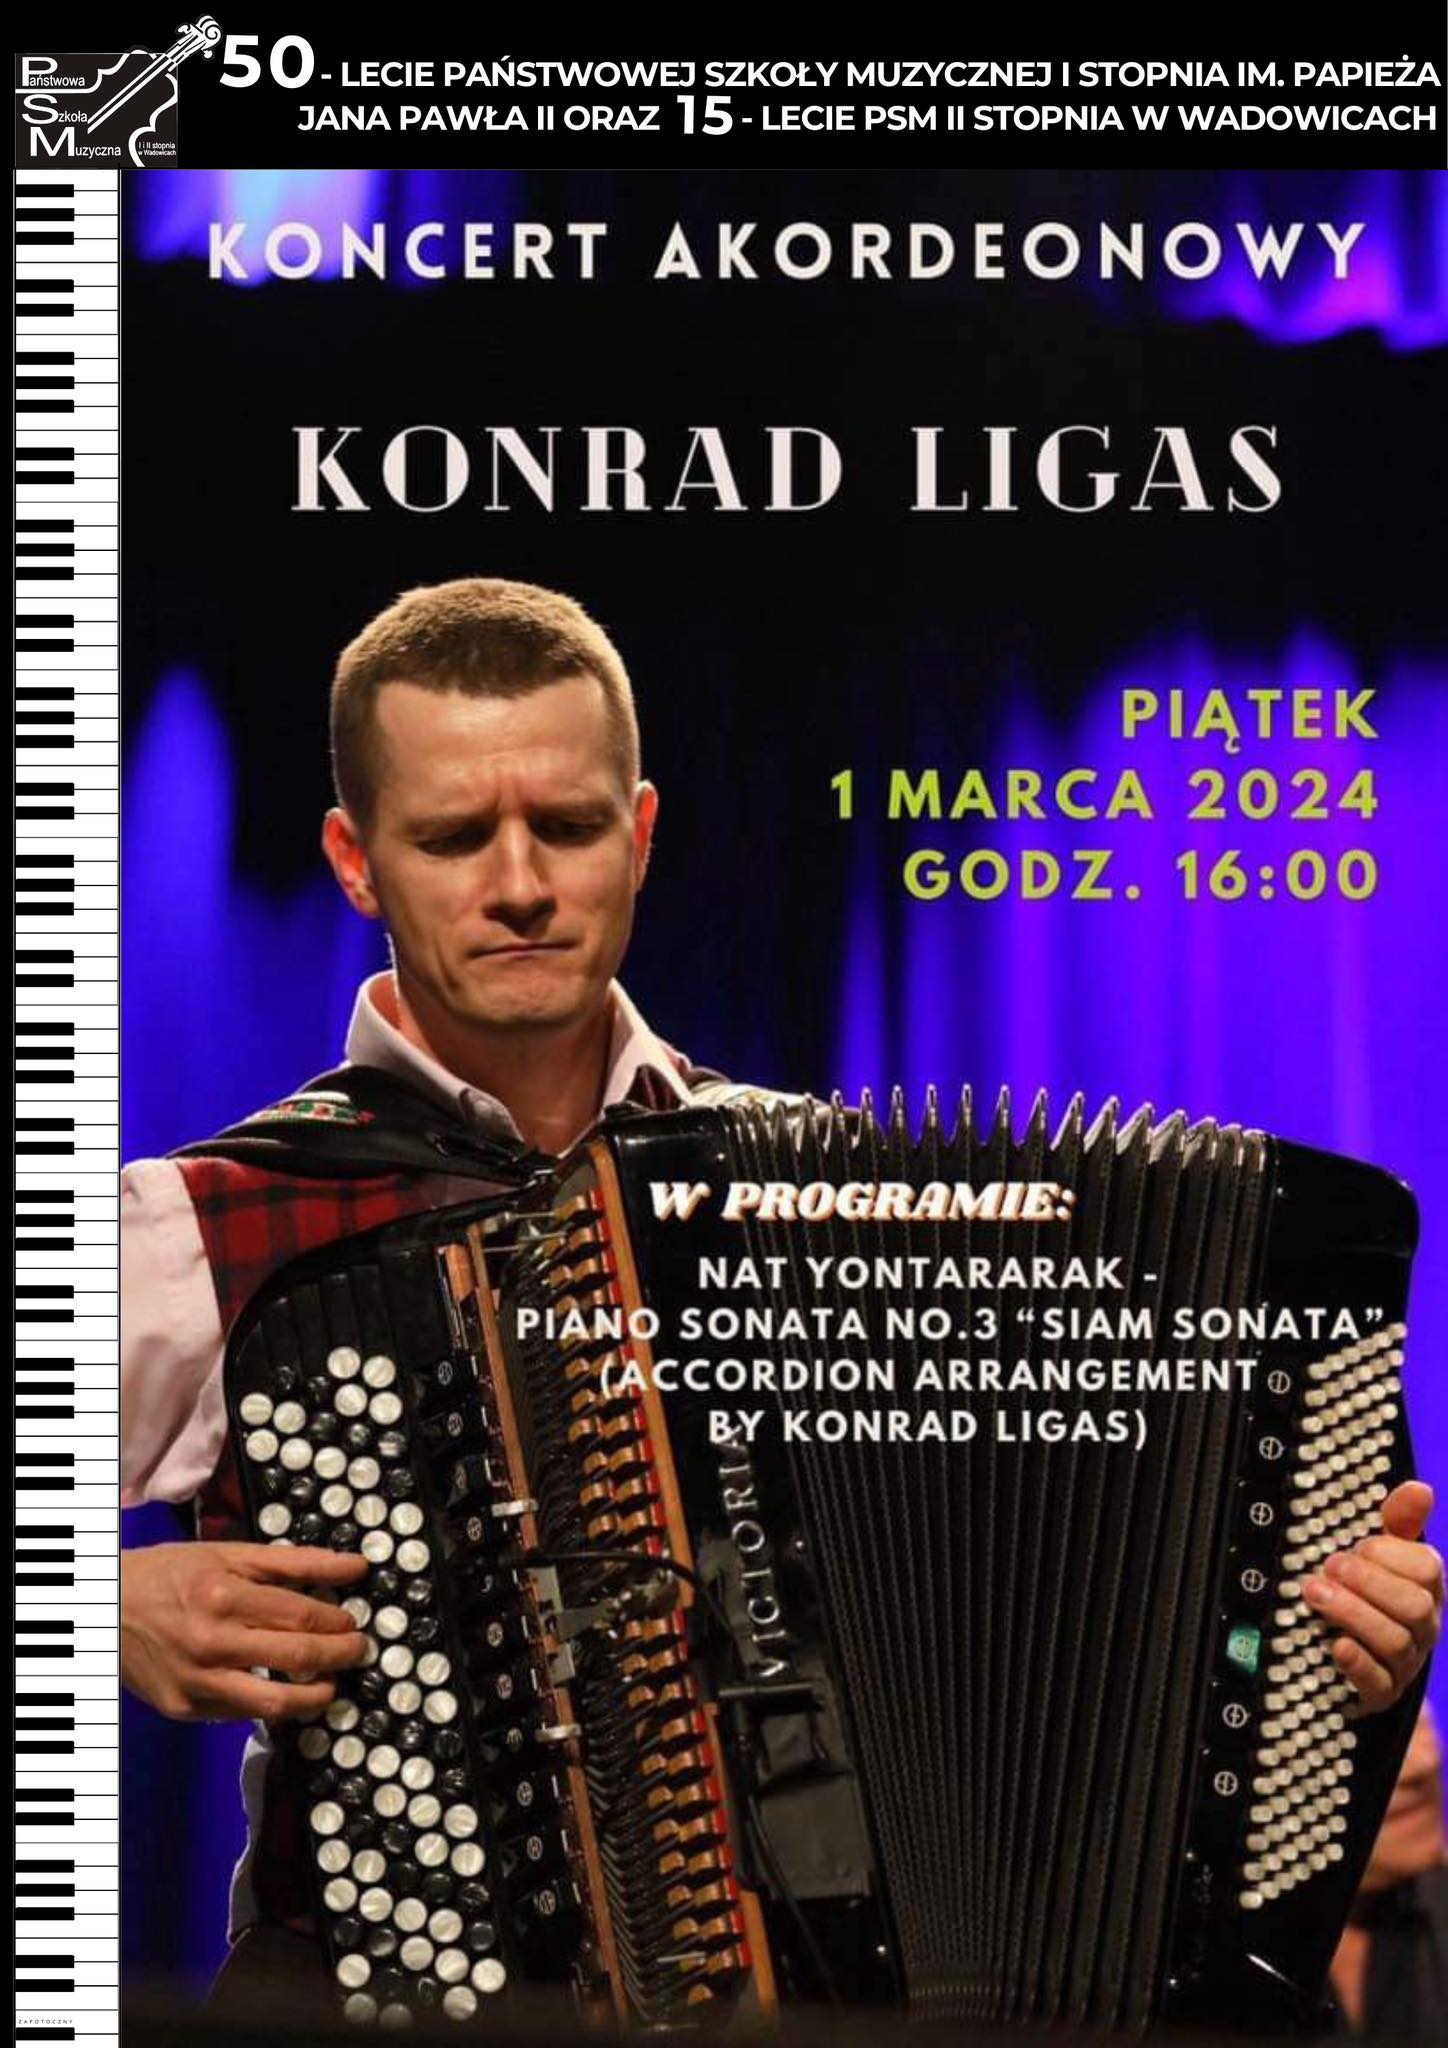 Koncert akordeonowy - Konrad Ligas 01.03.2024